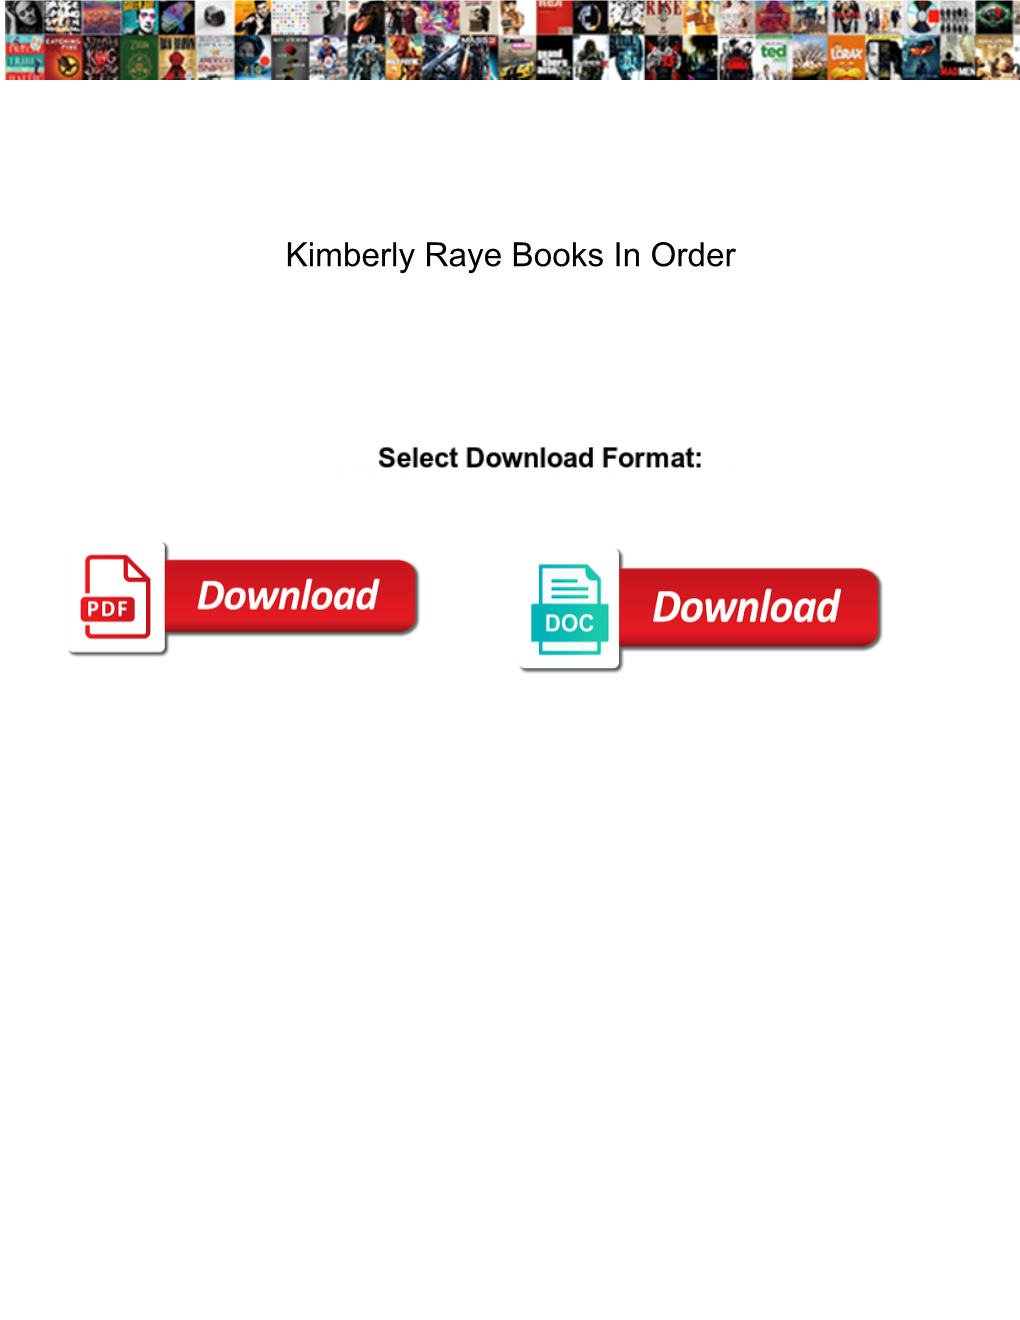 Kimberly Raye Books in Order